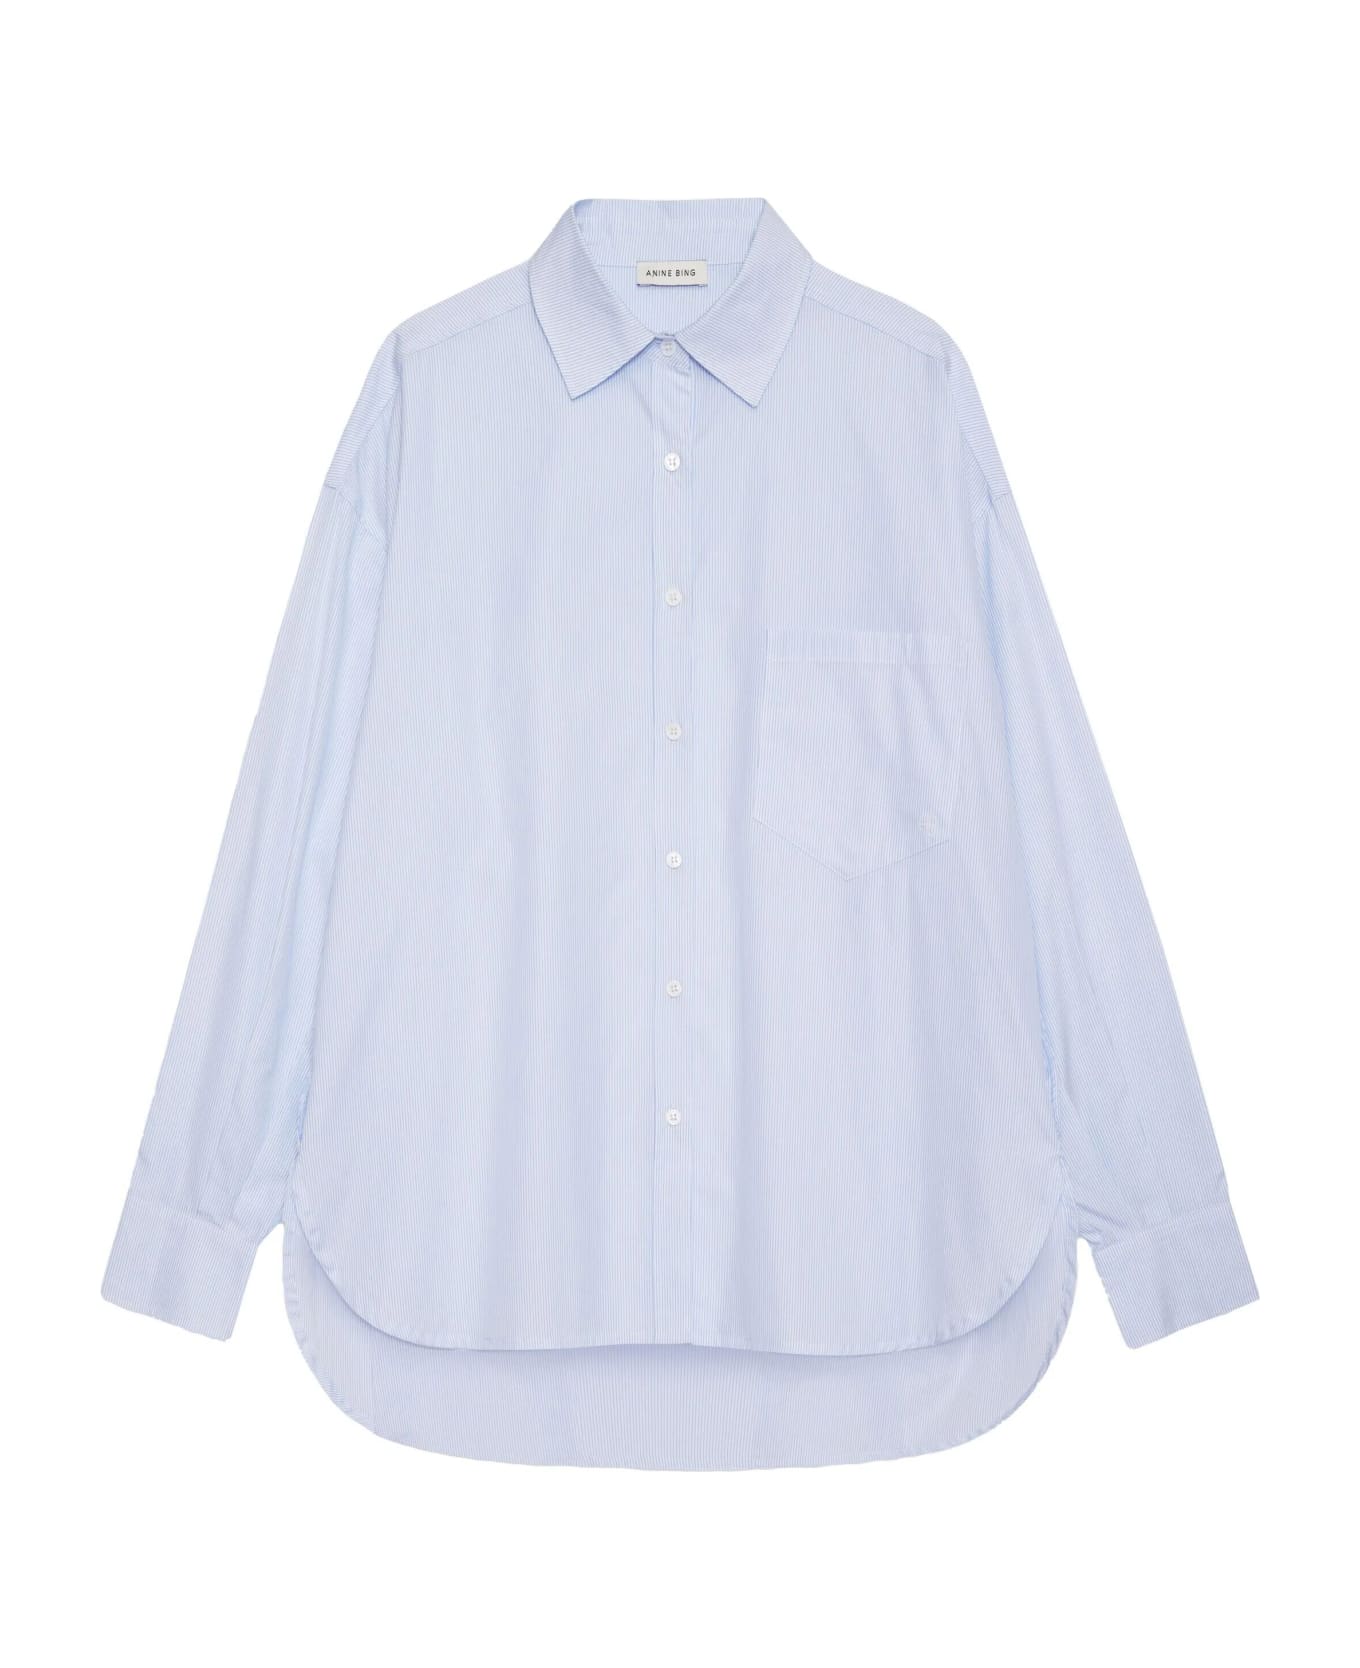 Anine Bing Chrissy Shirt Stripe - Blue And White